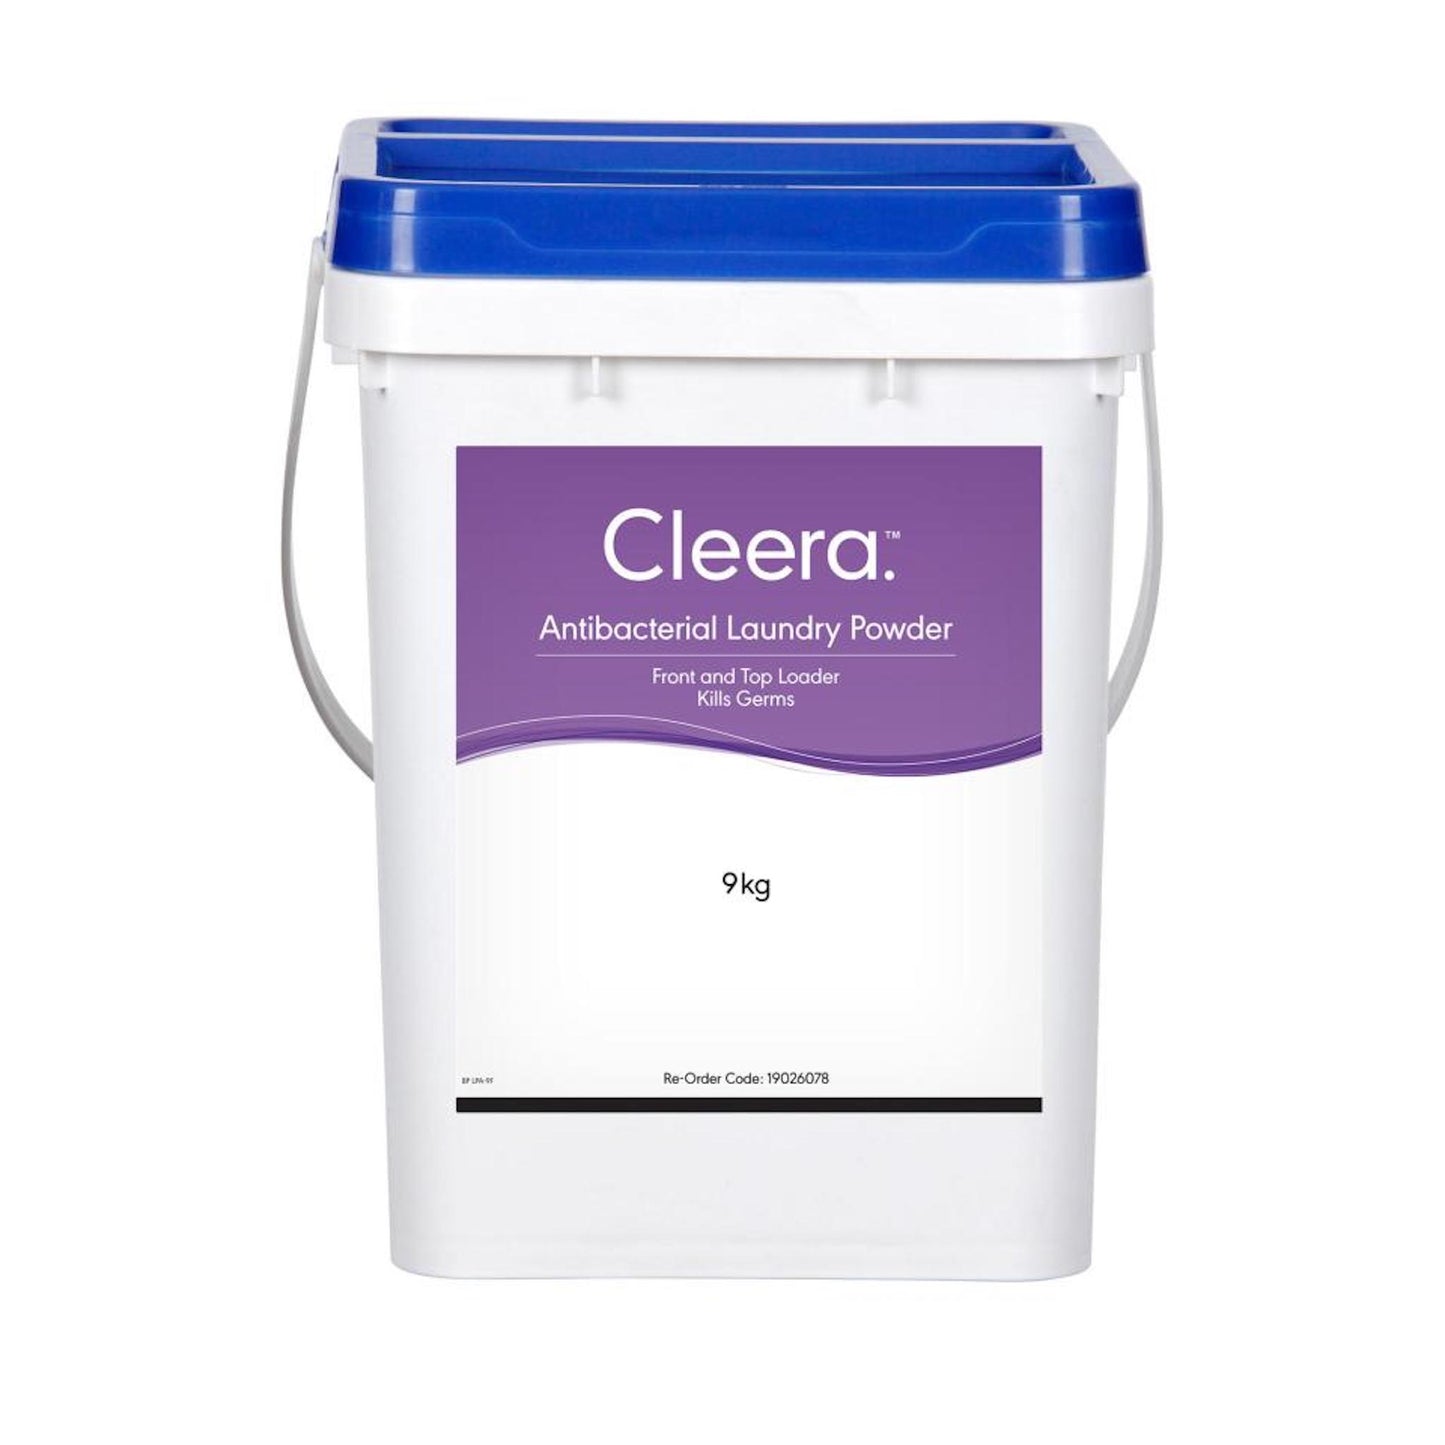 Cleera Antibacterial Laundry Powder 9kg